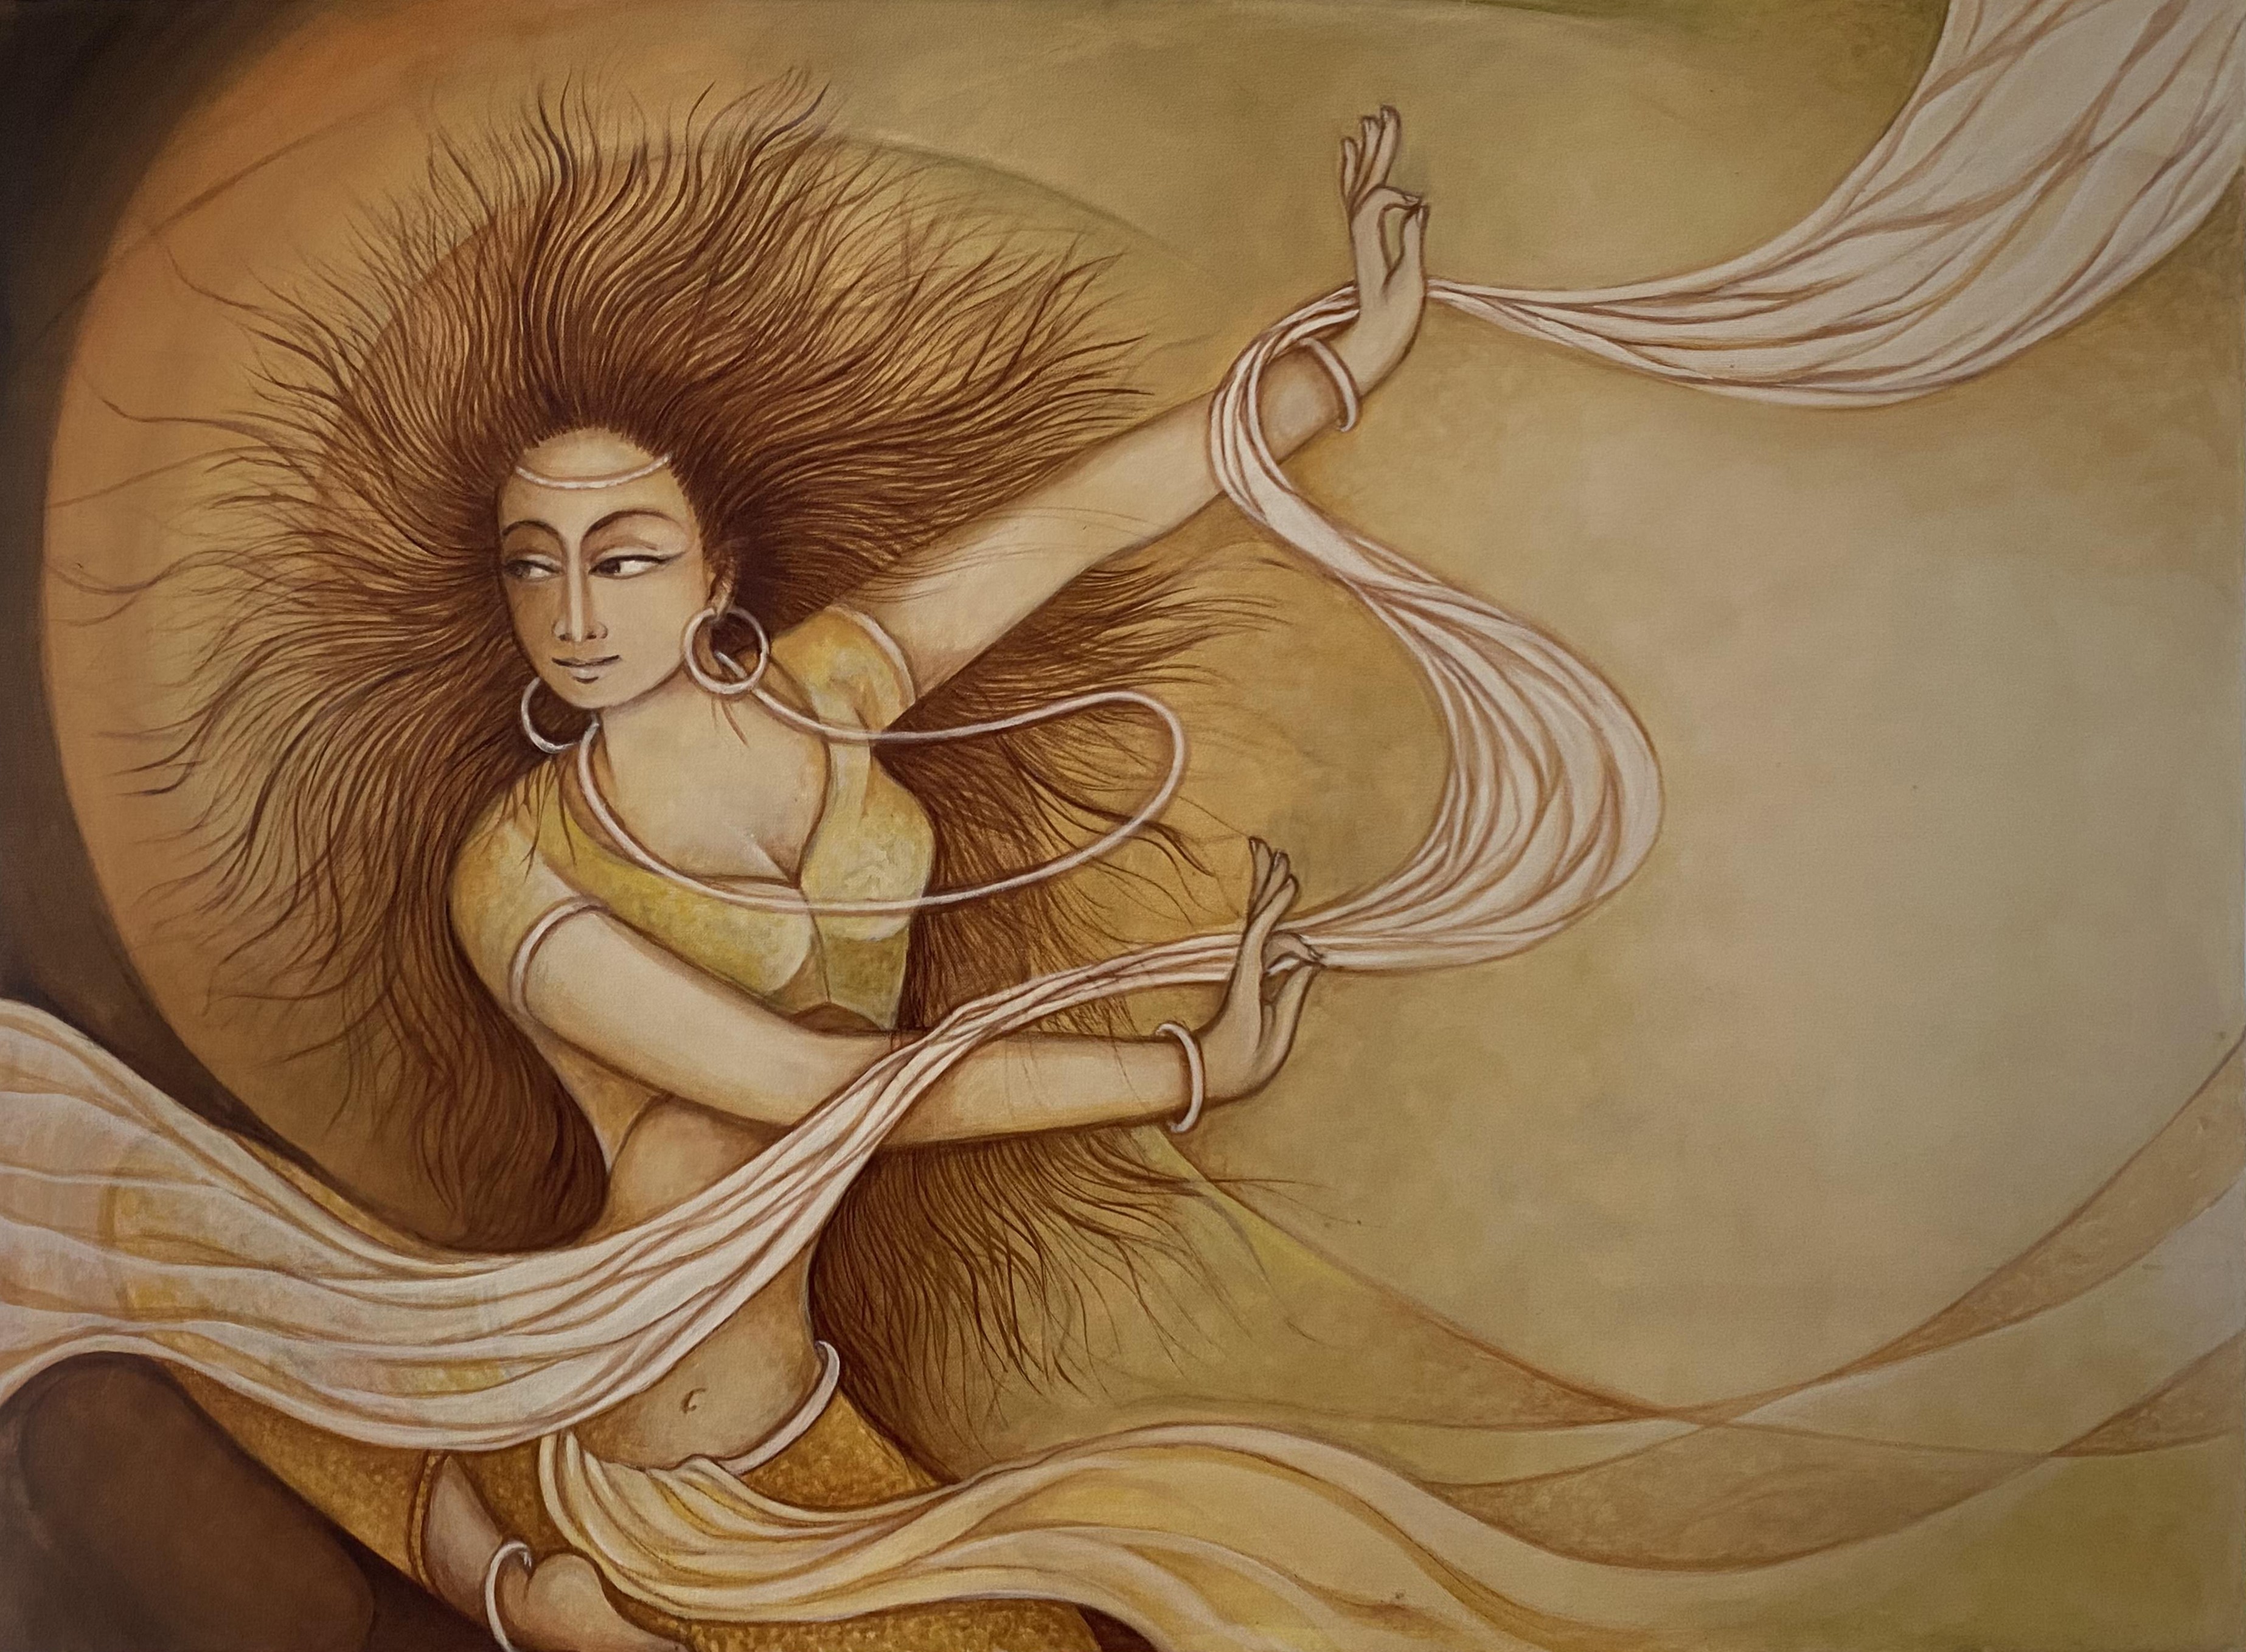 The Wind by Upul Jayashantha